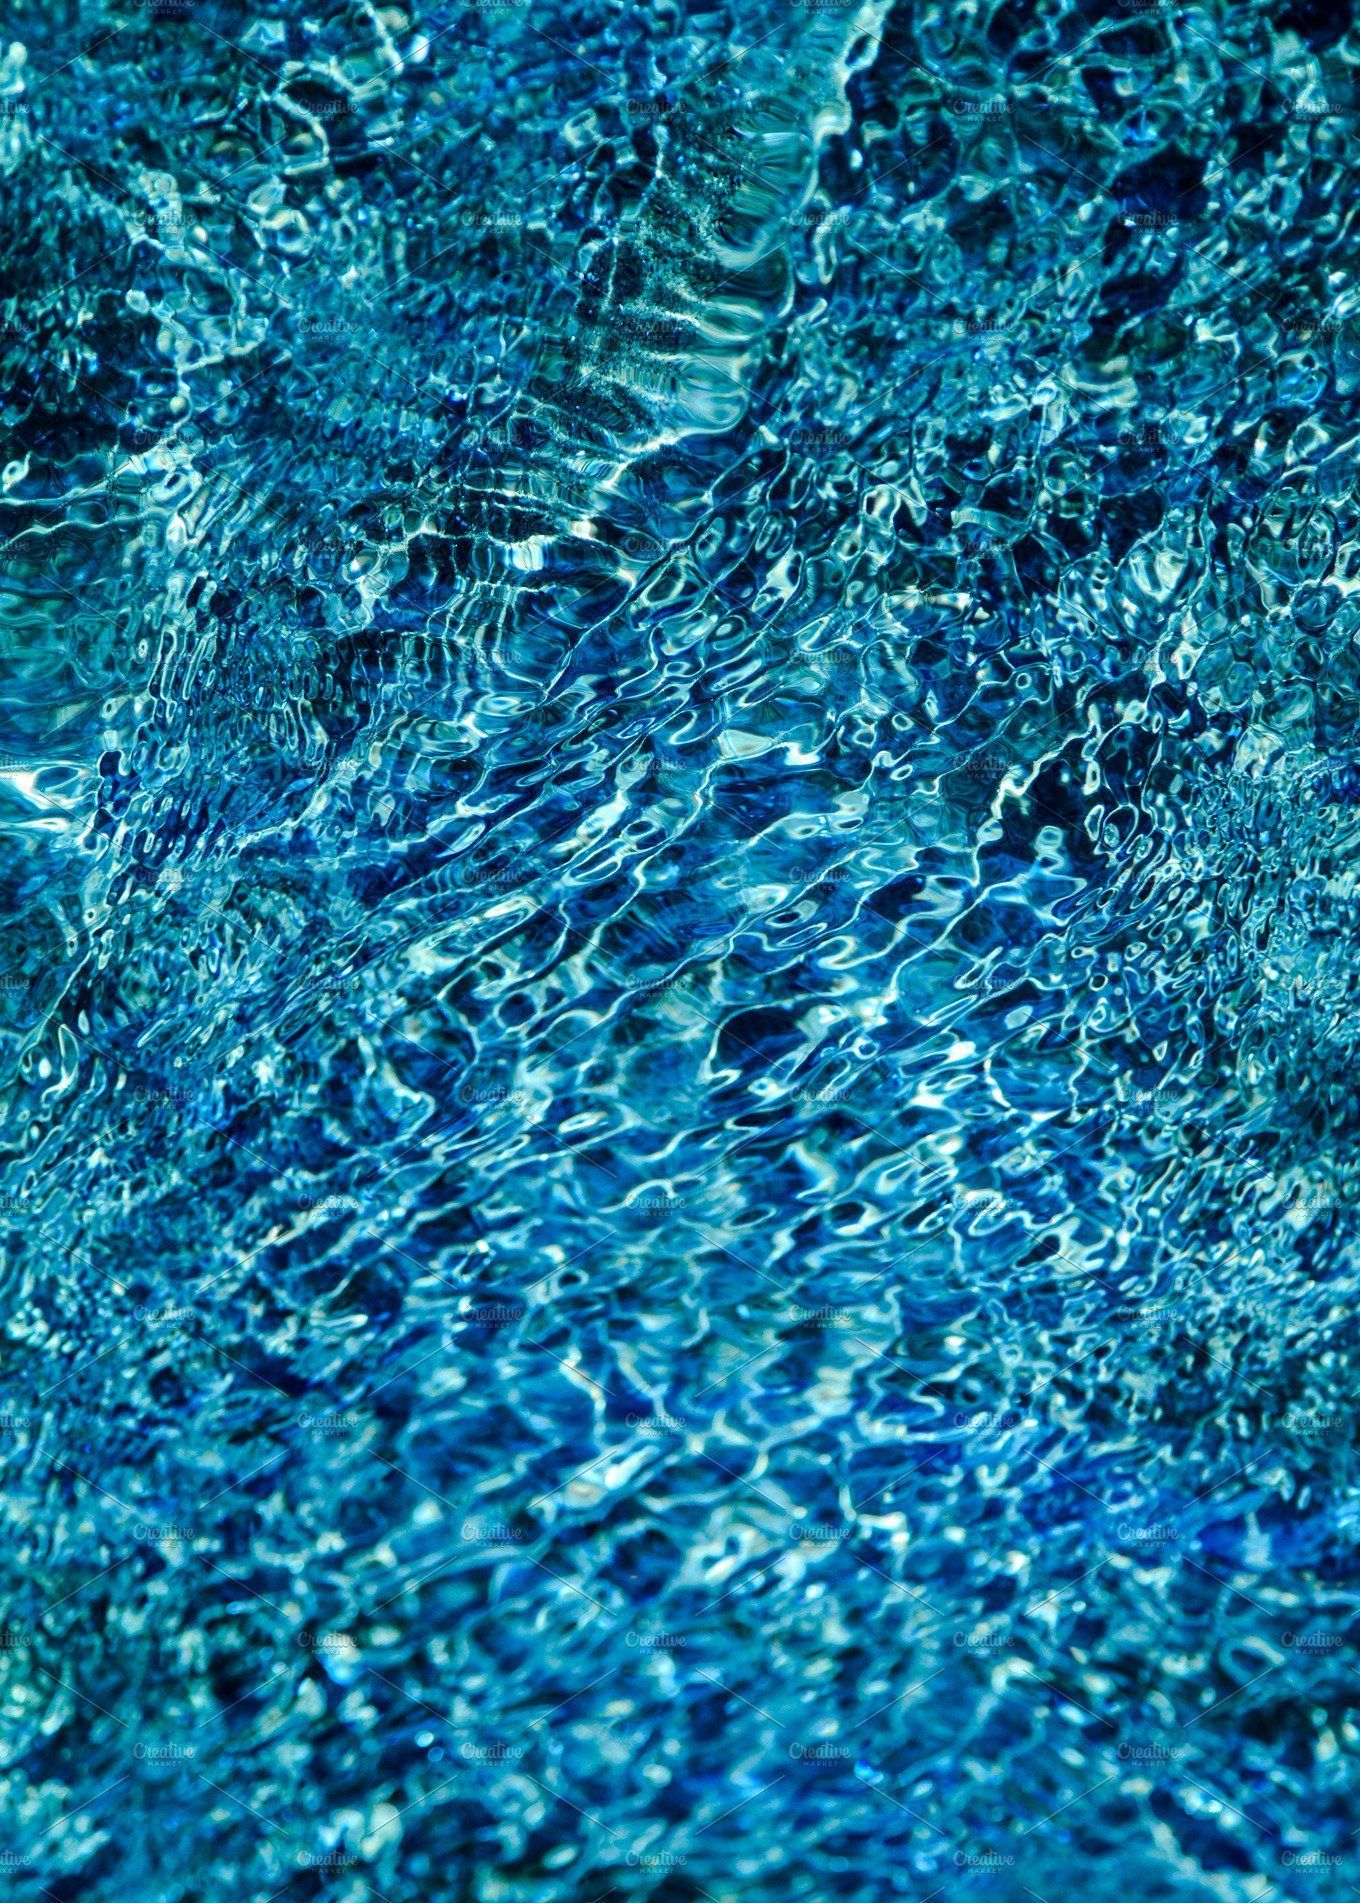 Blue Water Background. Water background, Water abstract, Blue water